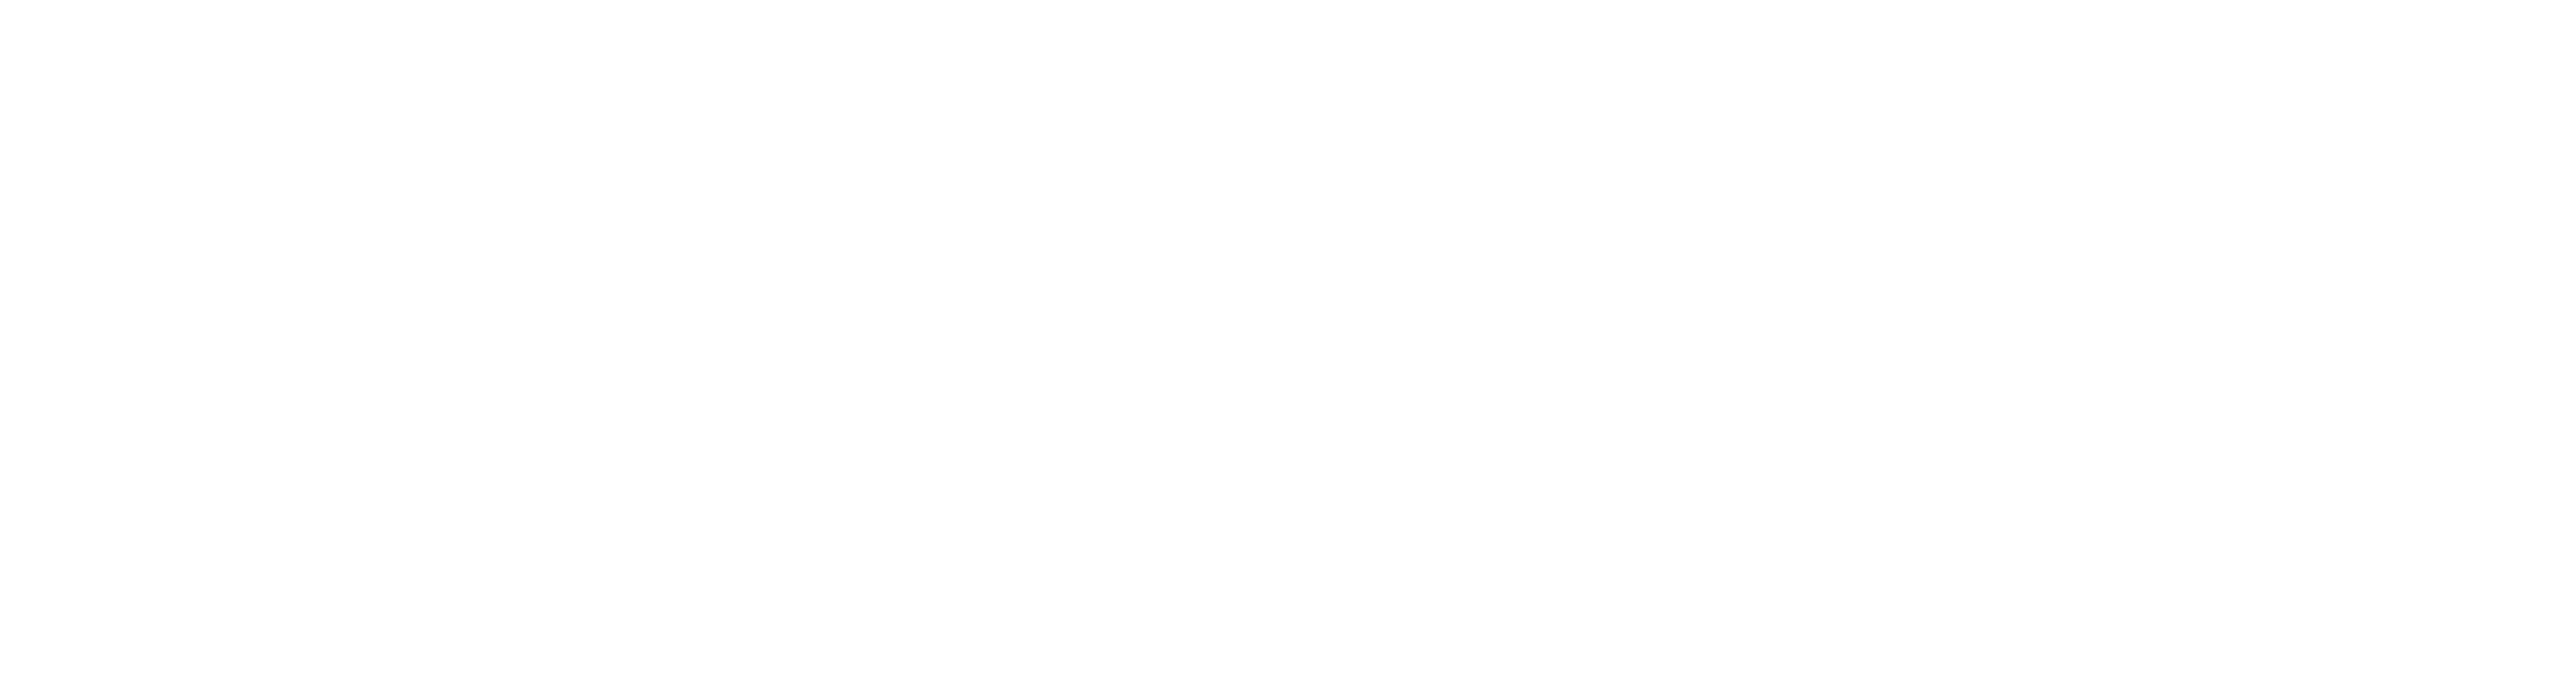 Lowtex – Valorizando sua marca!